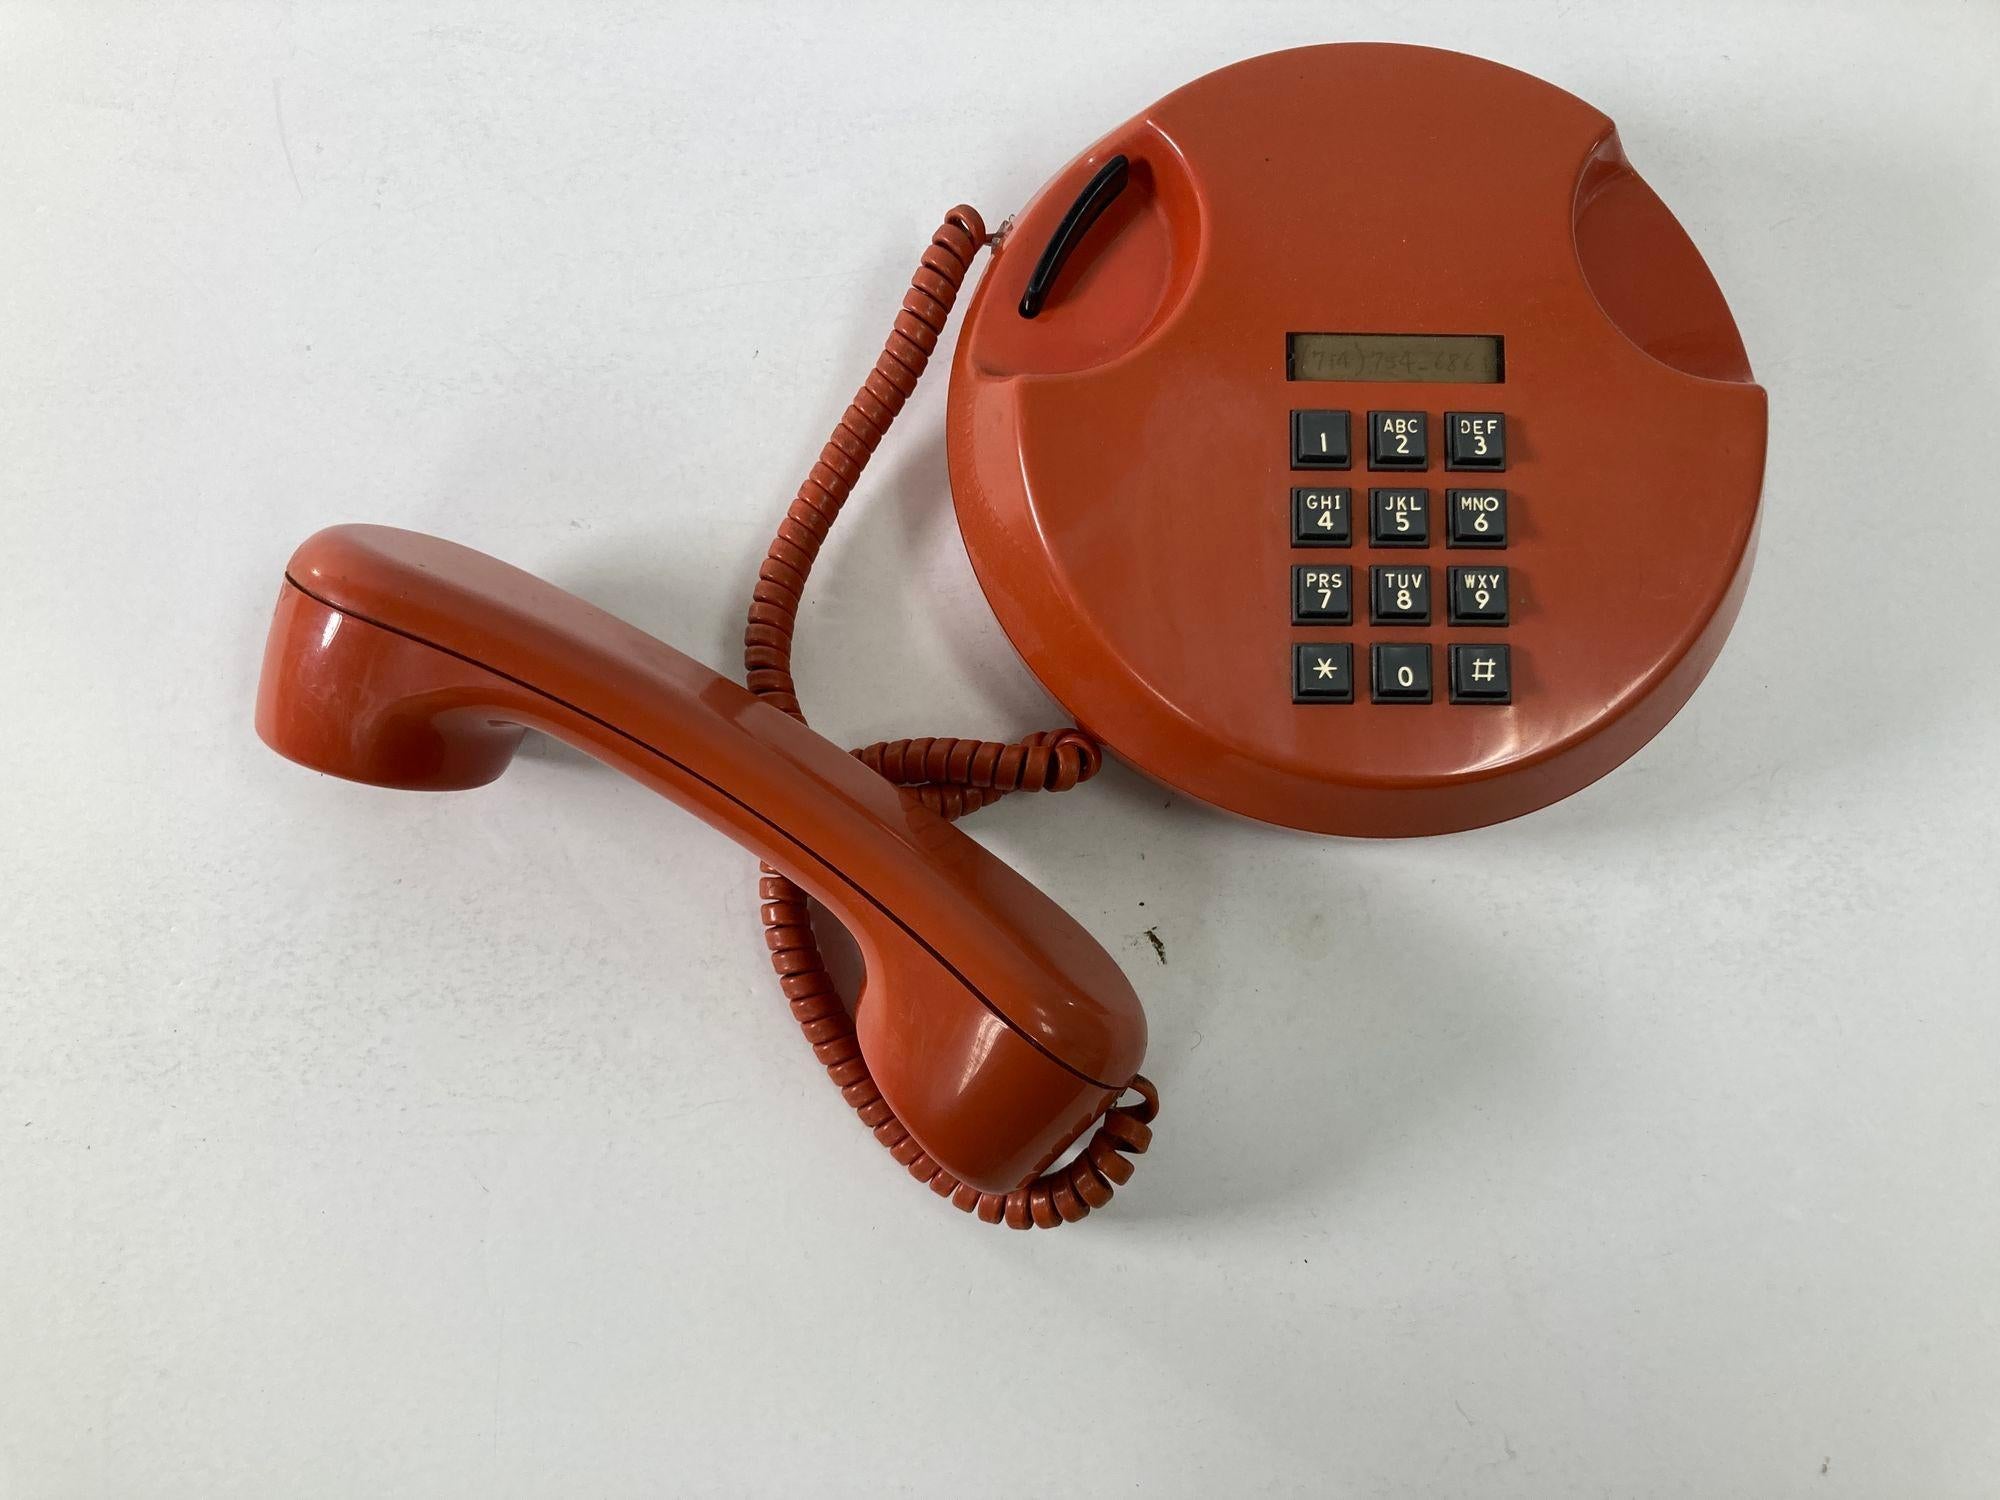 Bakelite Vintage Retro Push-Button Round Telephone Burnt Orange Color from the, 70s